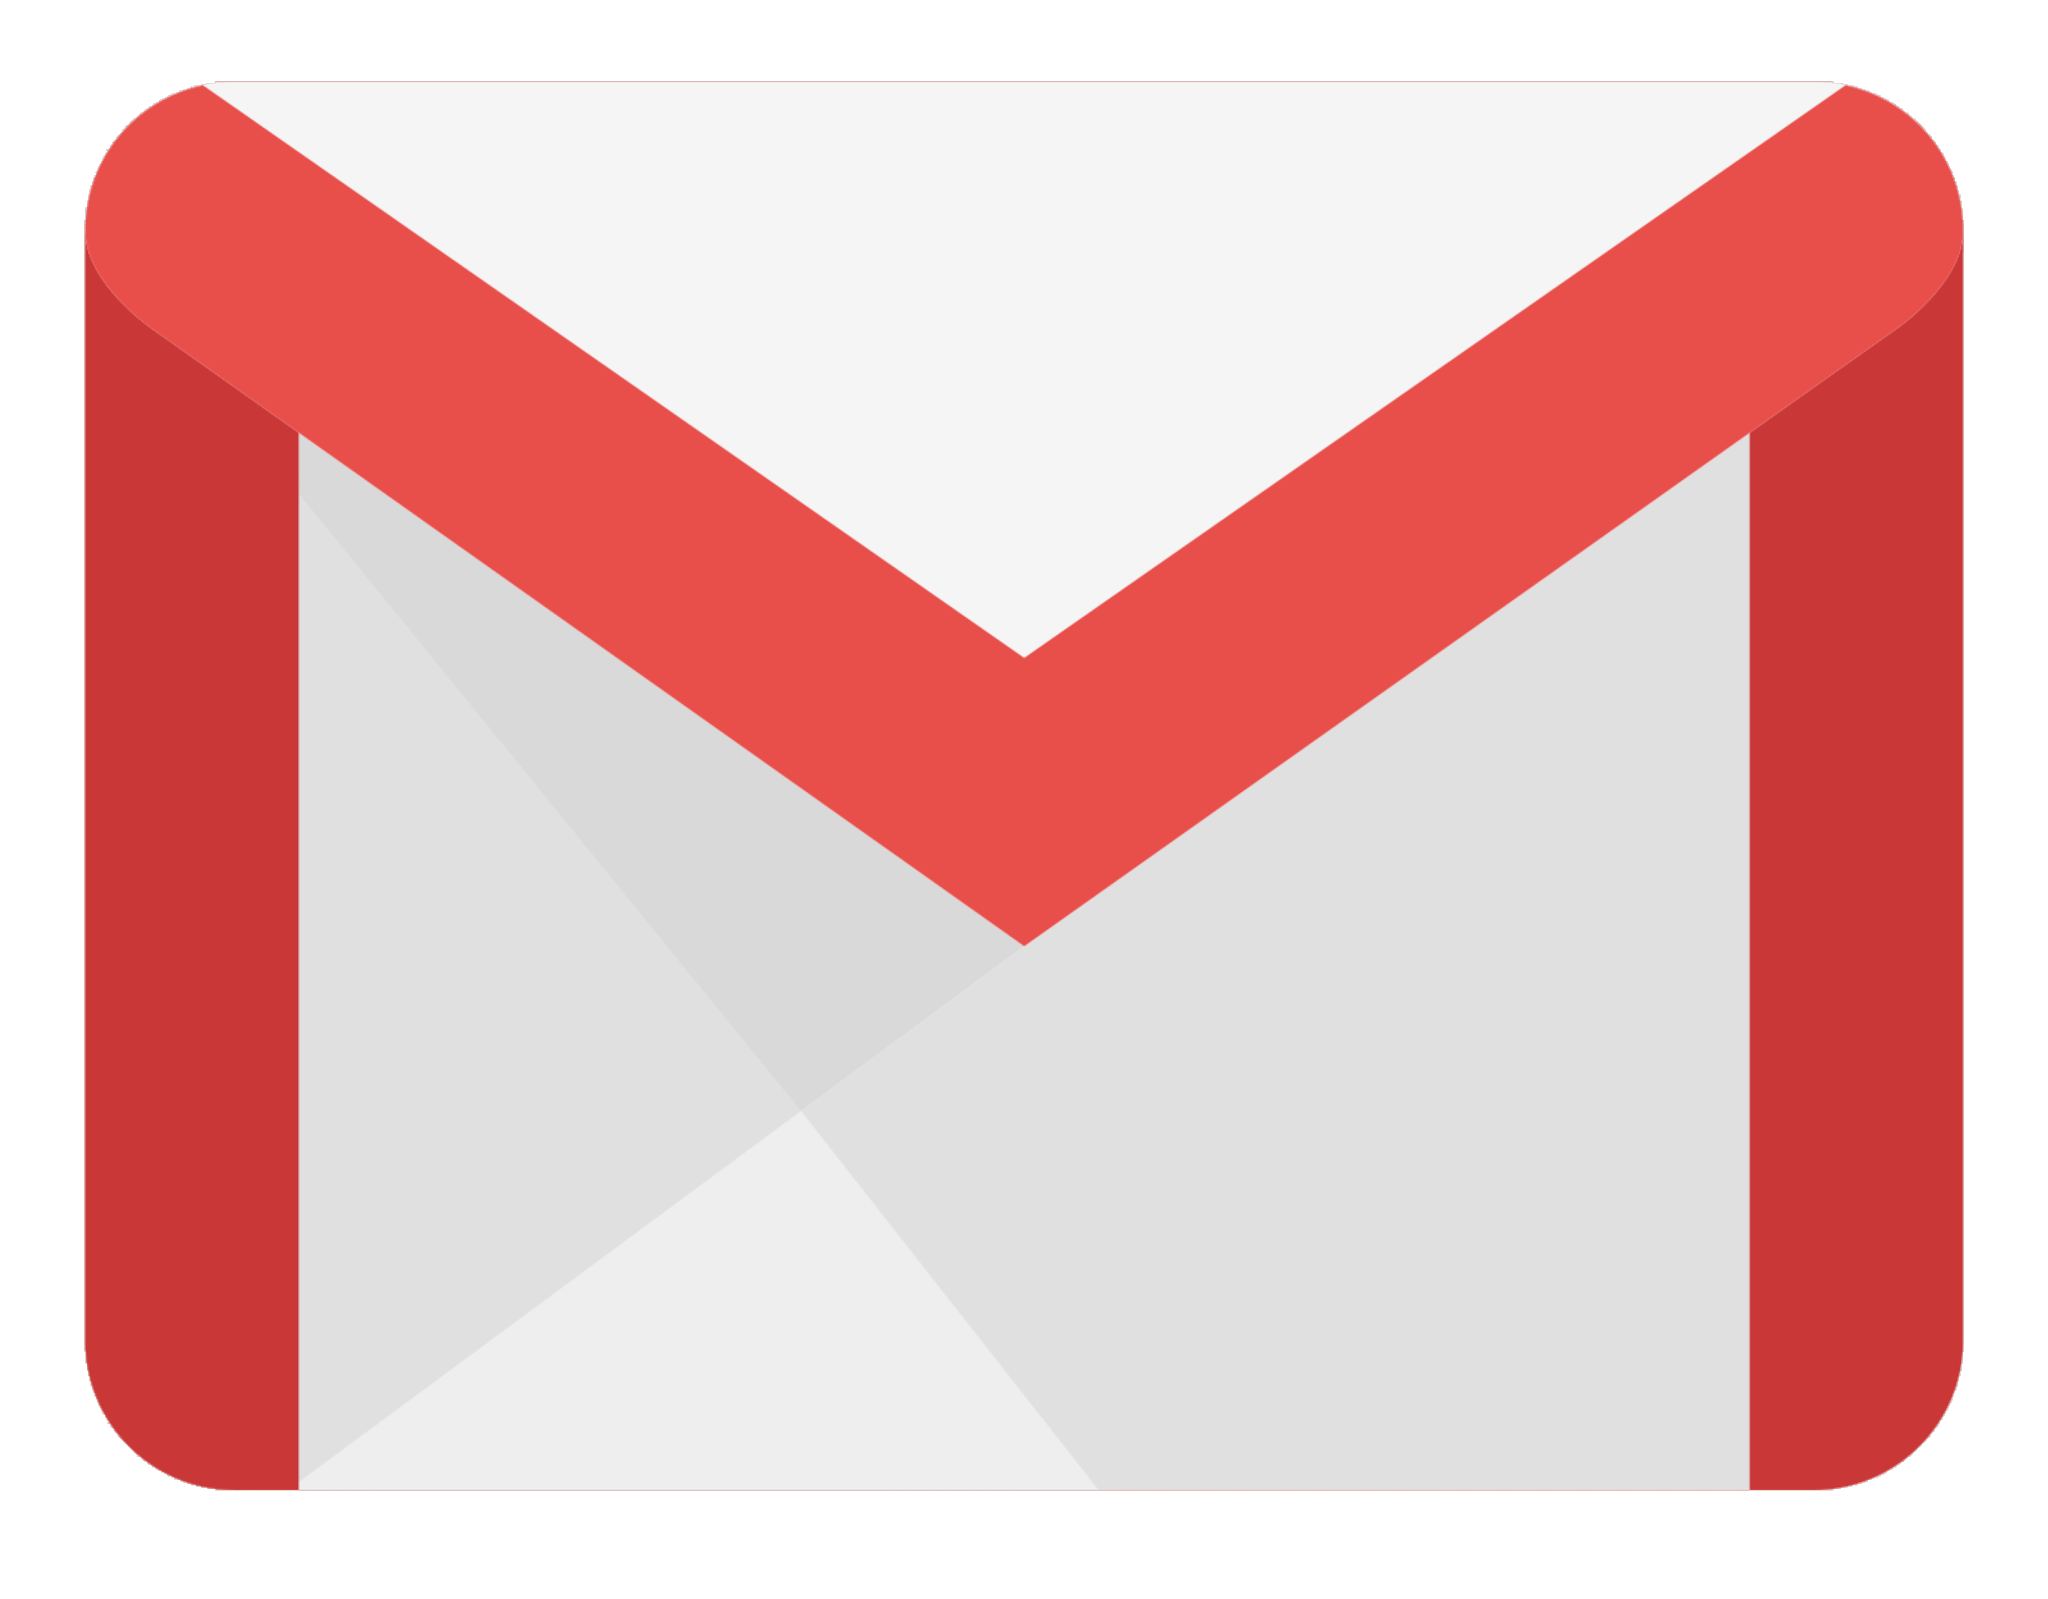 Indir bir. Gmail logo. Gmail logo PNG. Фавикон. Ава для аккаунта gmail.